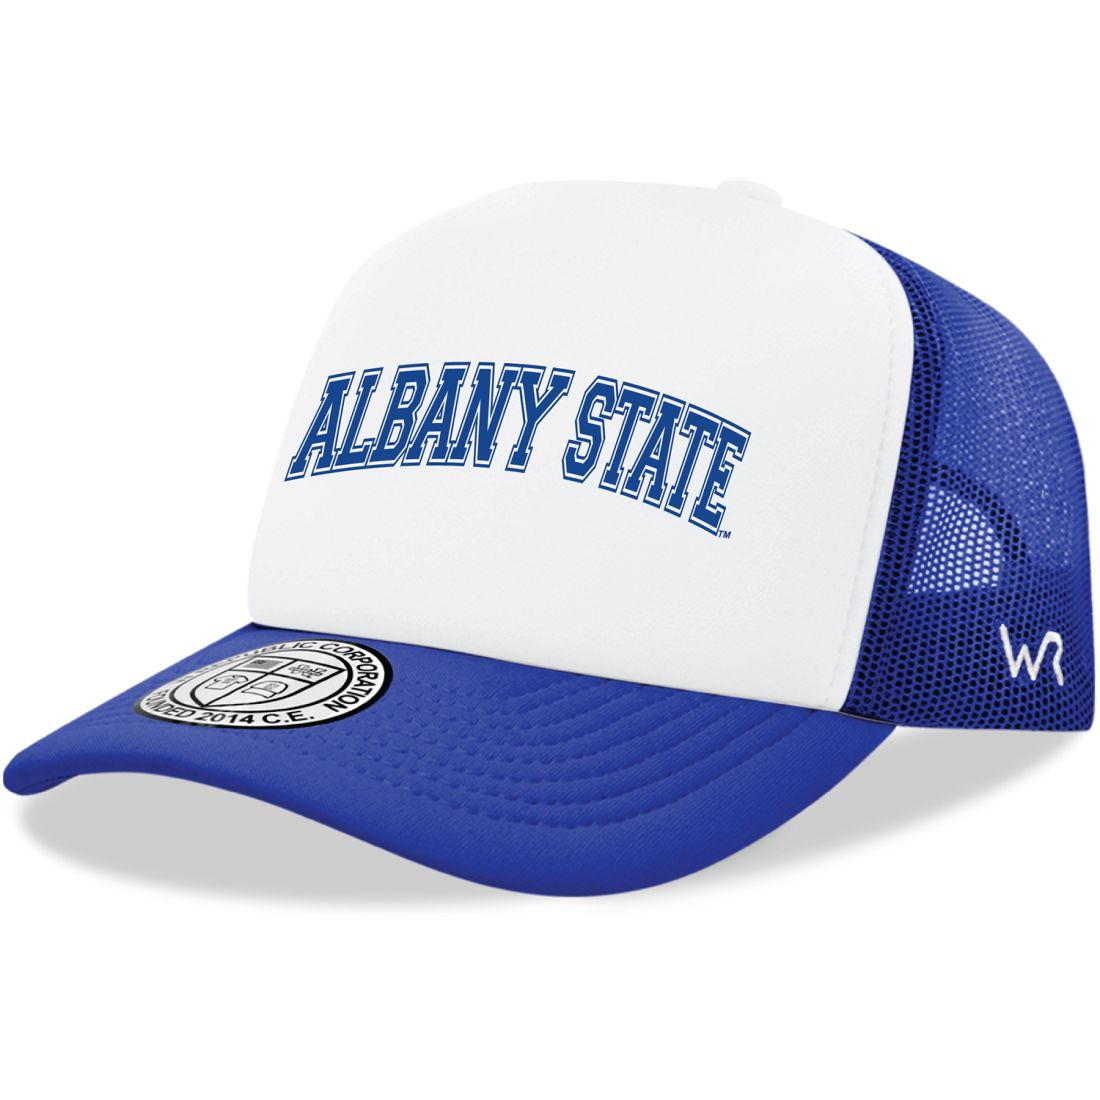 ASU Albany State University Golden Rams Practice Foam Trucker Hats